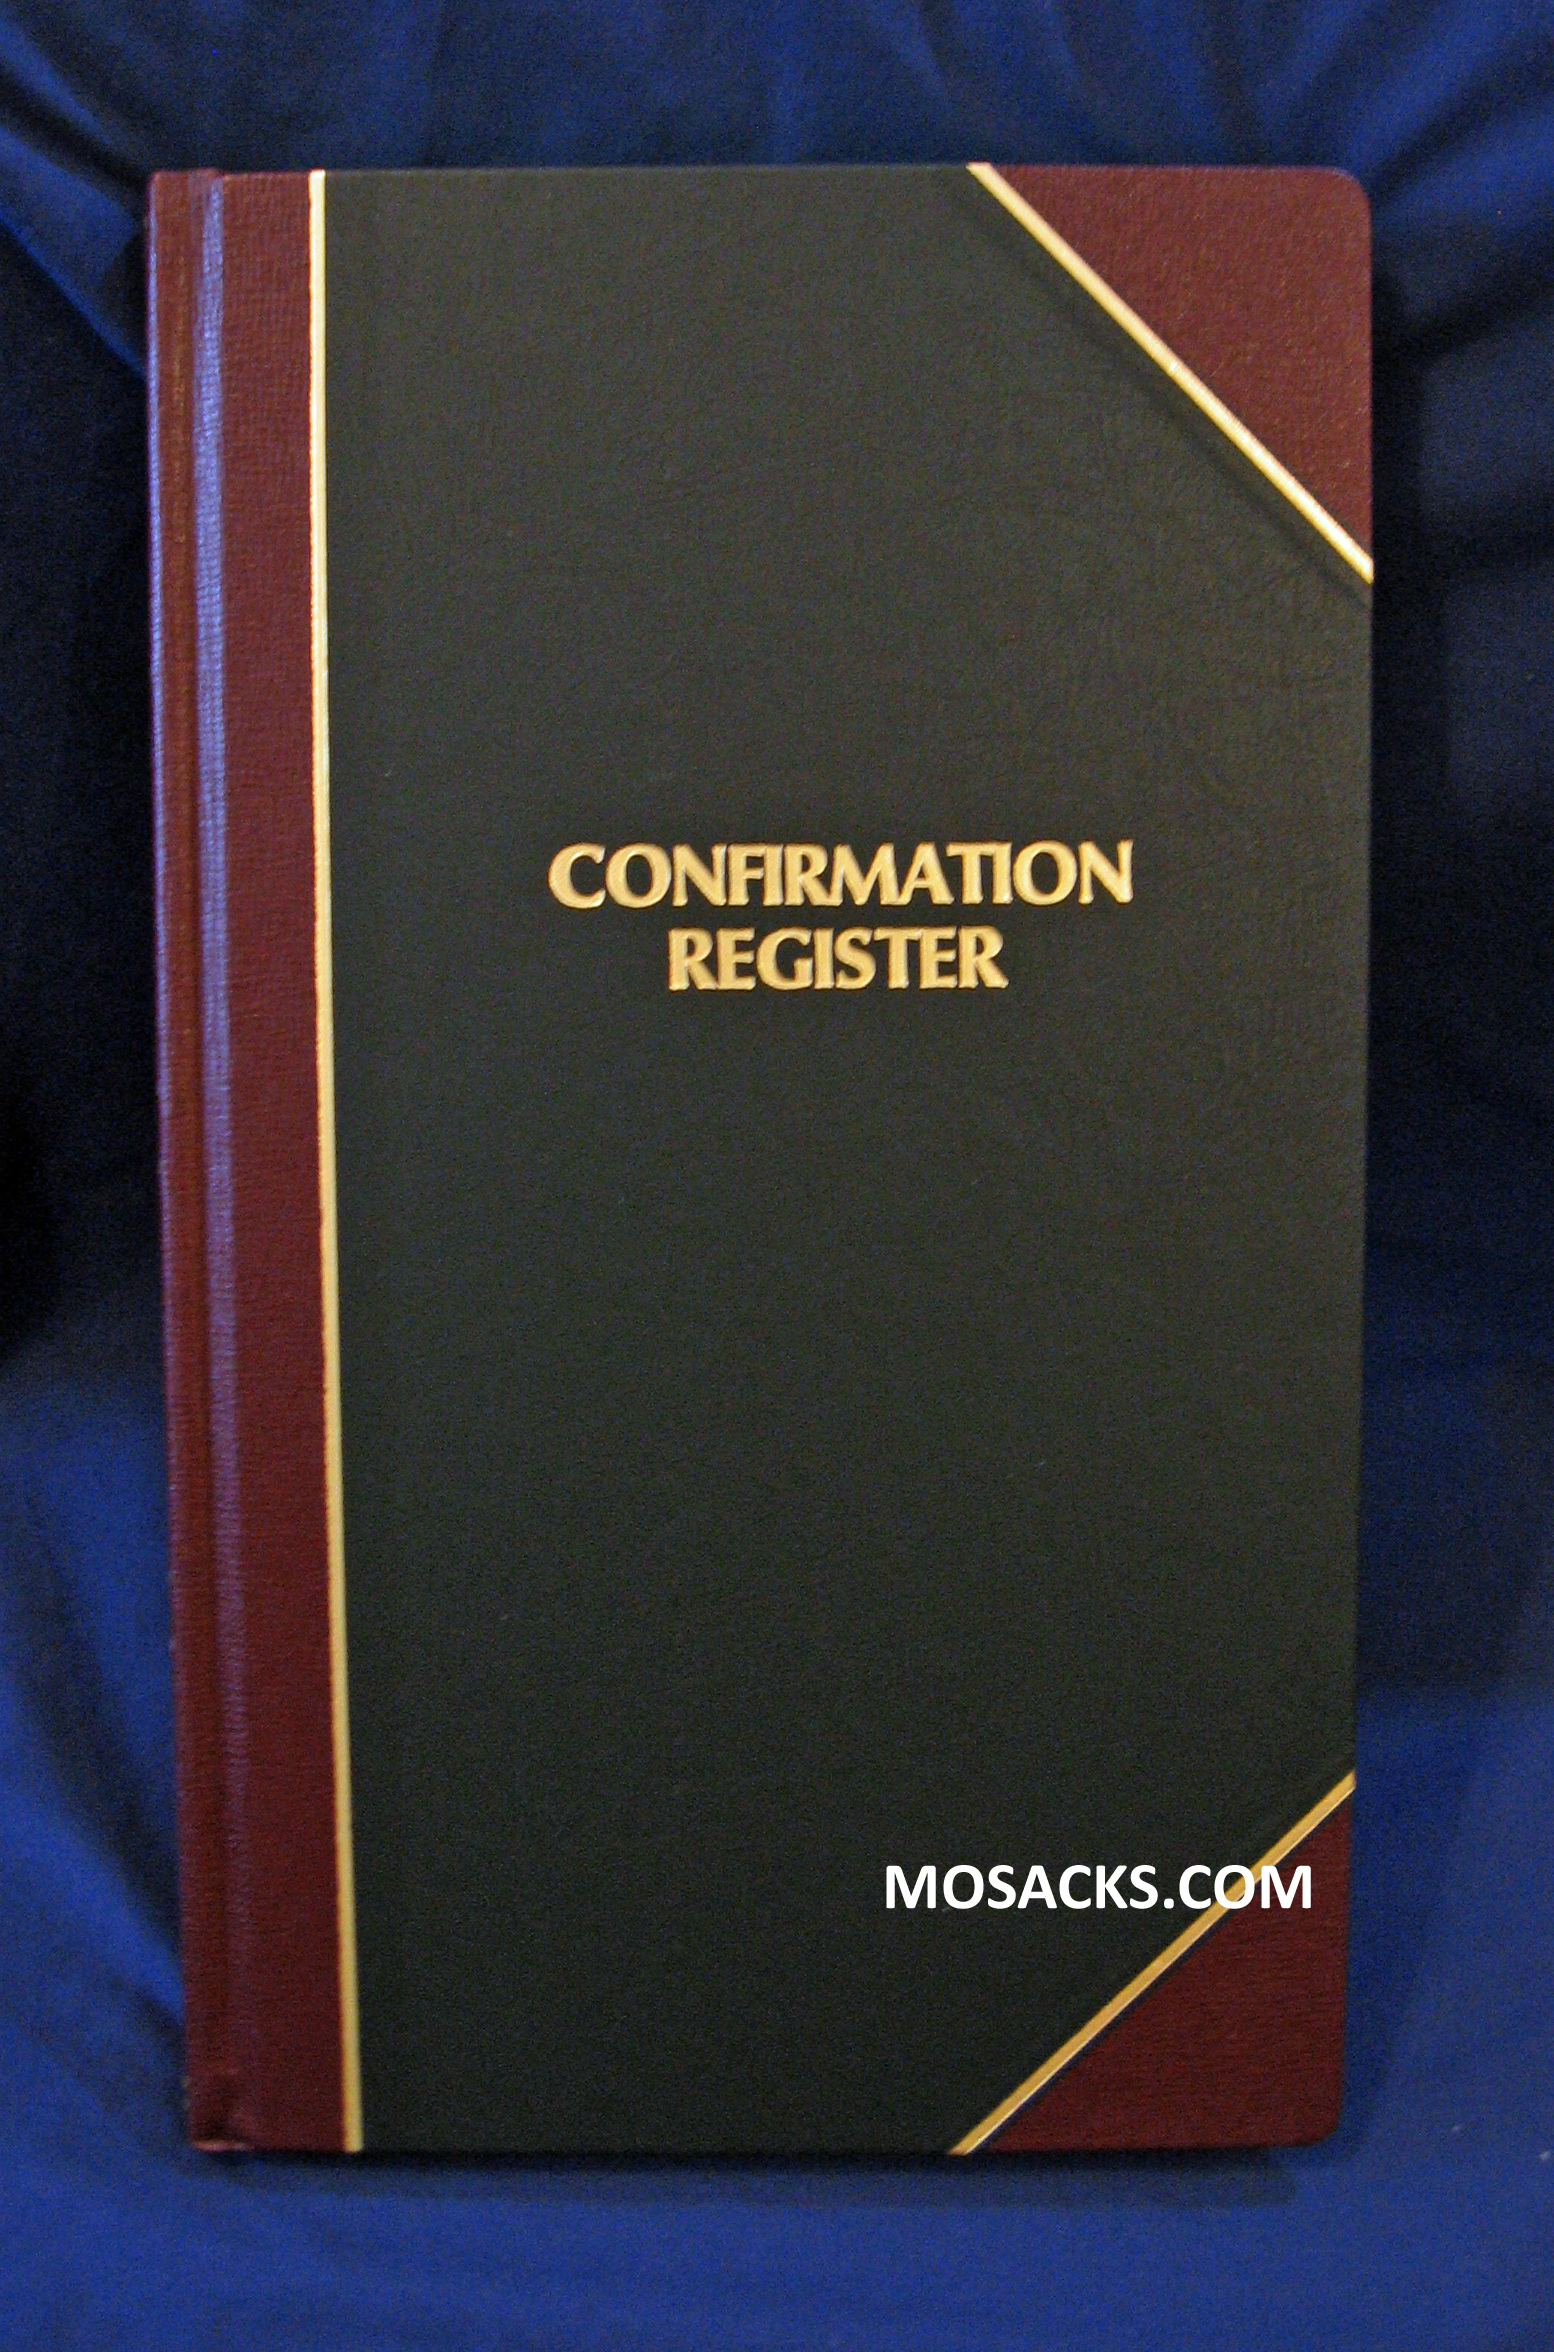 Confirmation Register No. 173 Standard Edition